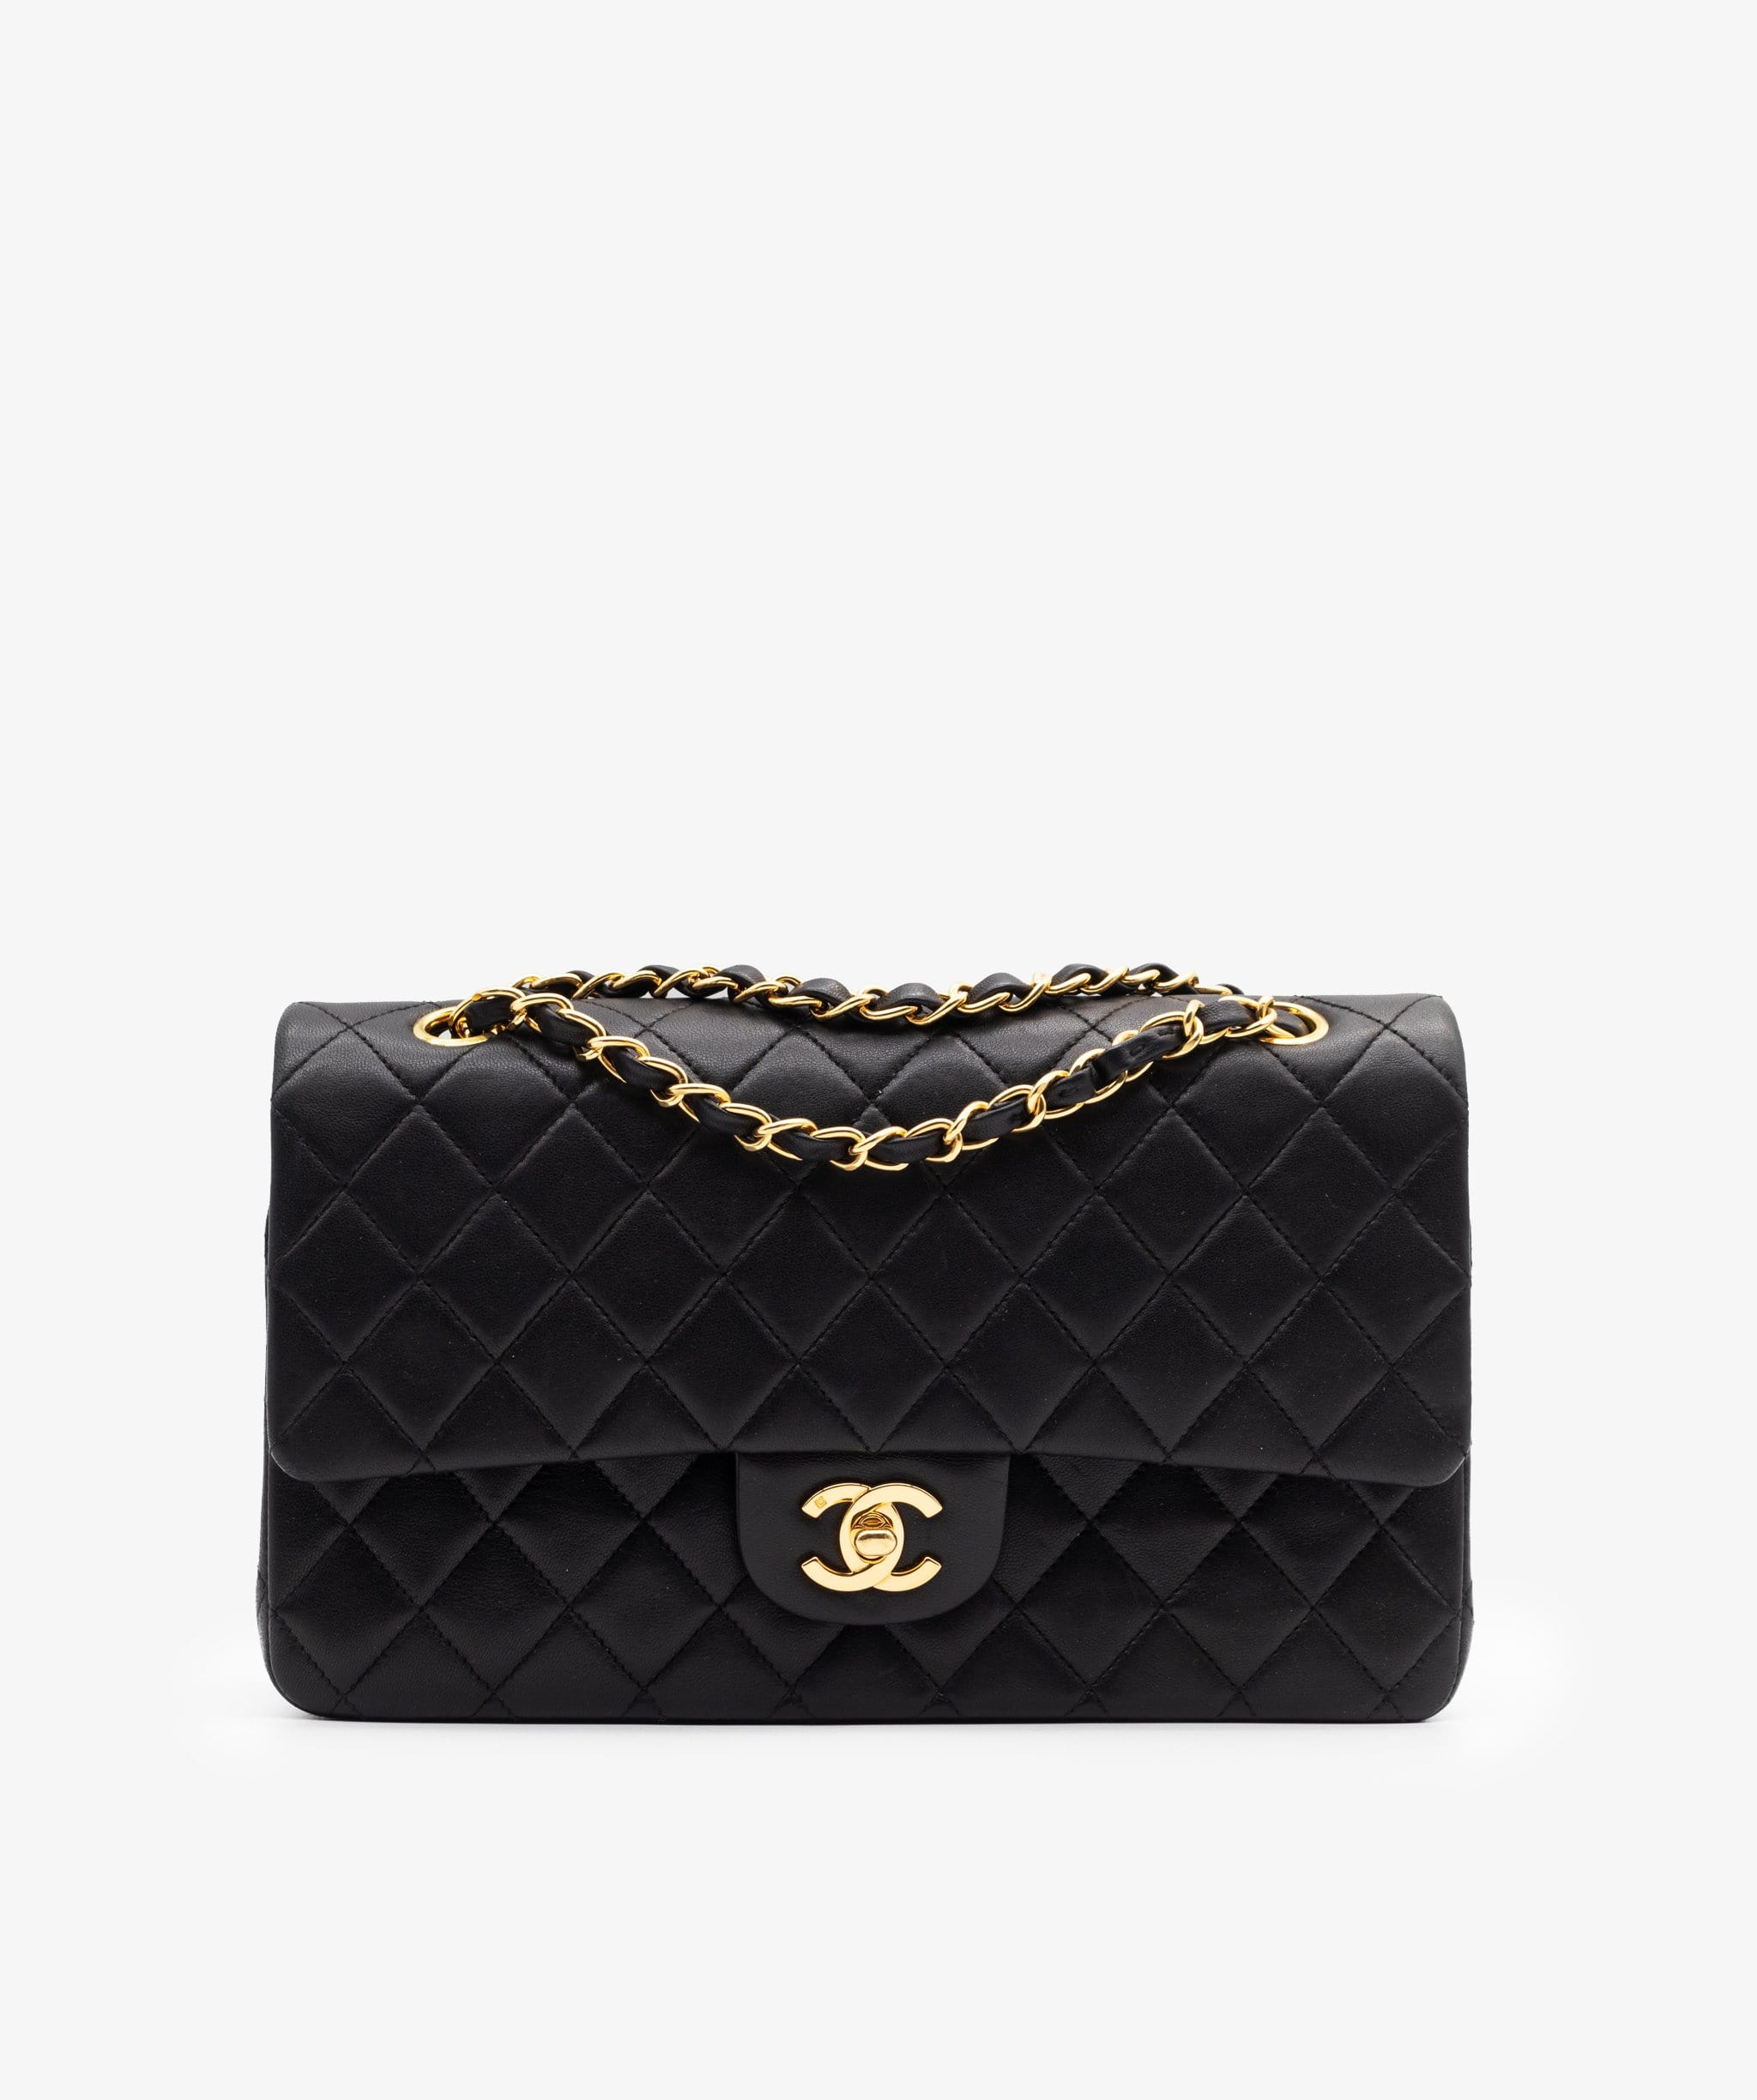 Chanel Classic black Chanel flap medium